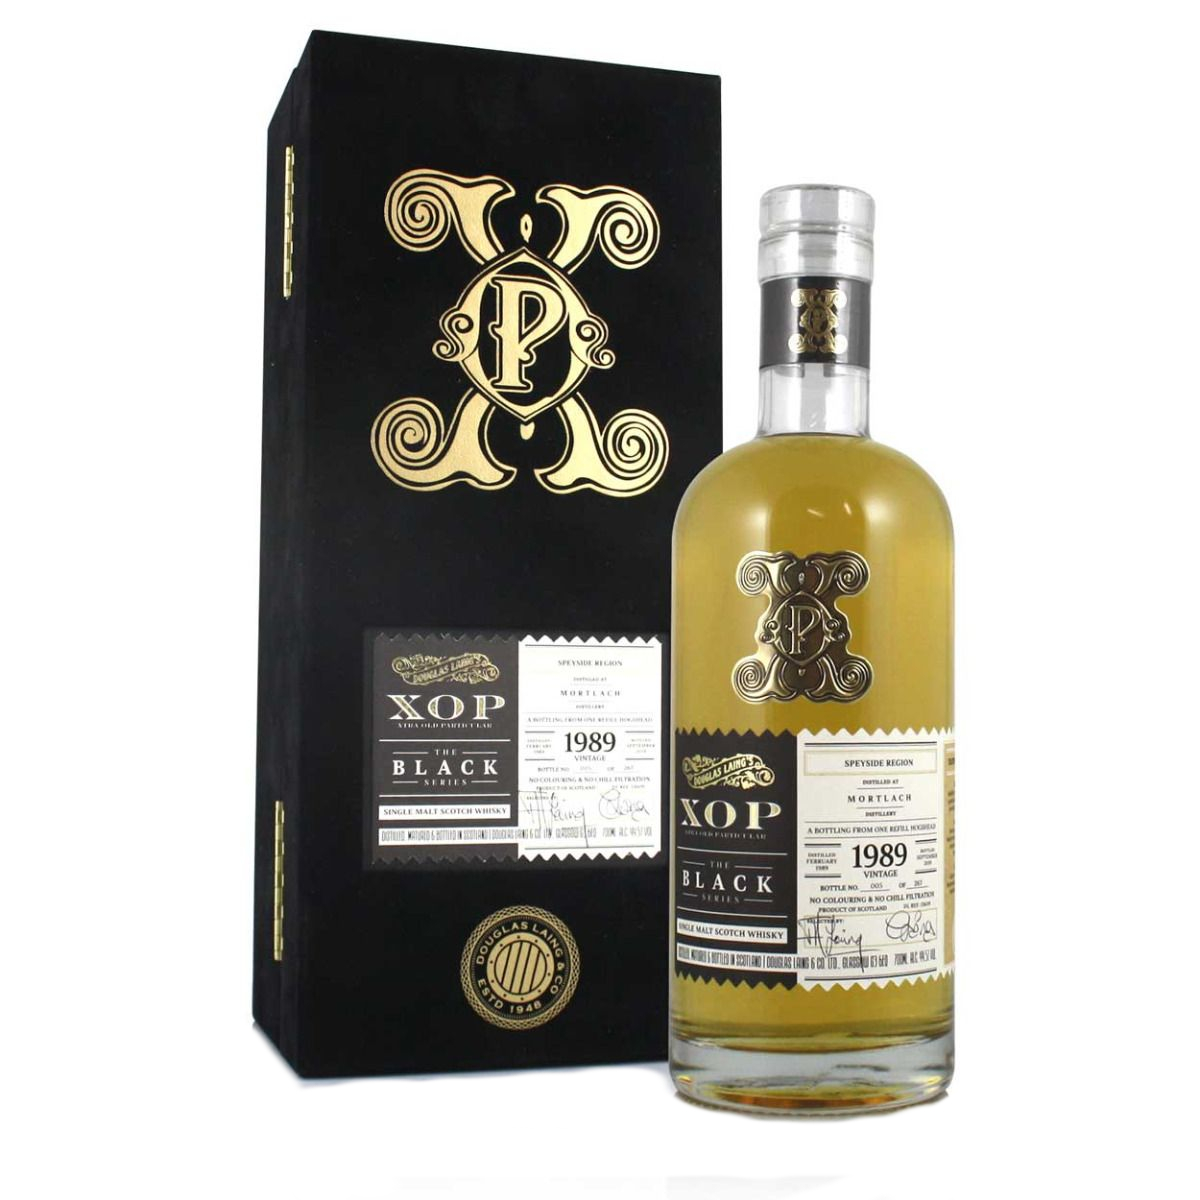 Xtra Old Particular Black Mortlach 30 Years Single Cask Single Malt Whisky – Speyside Scotland